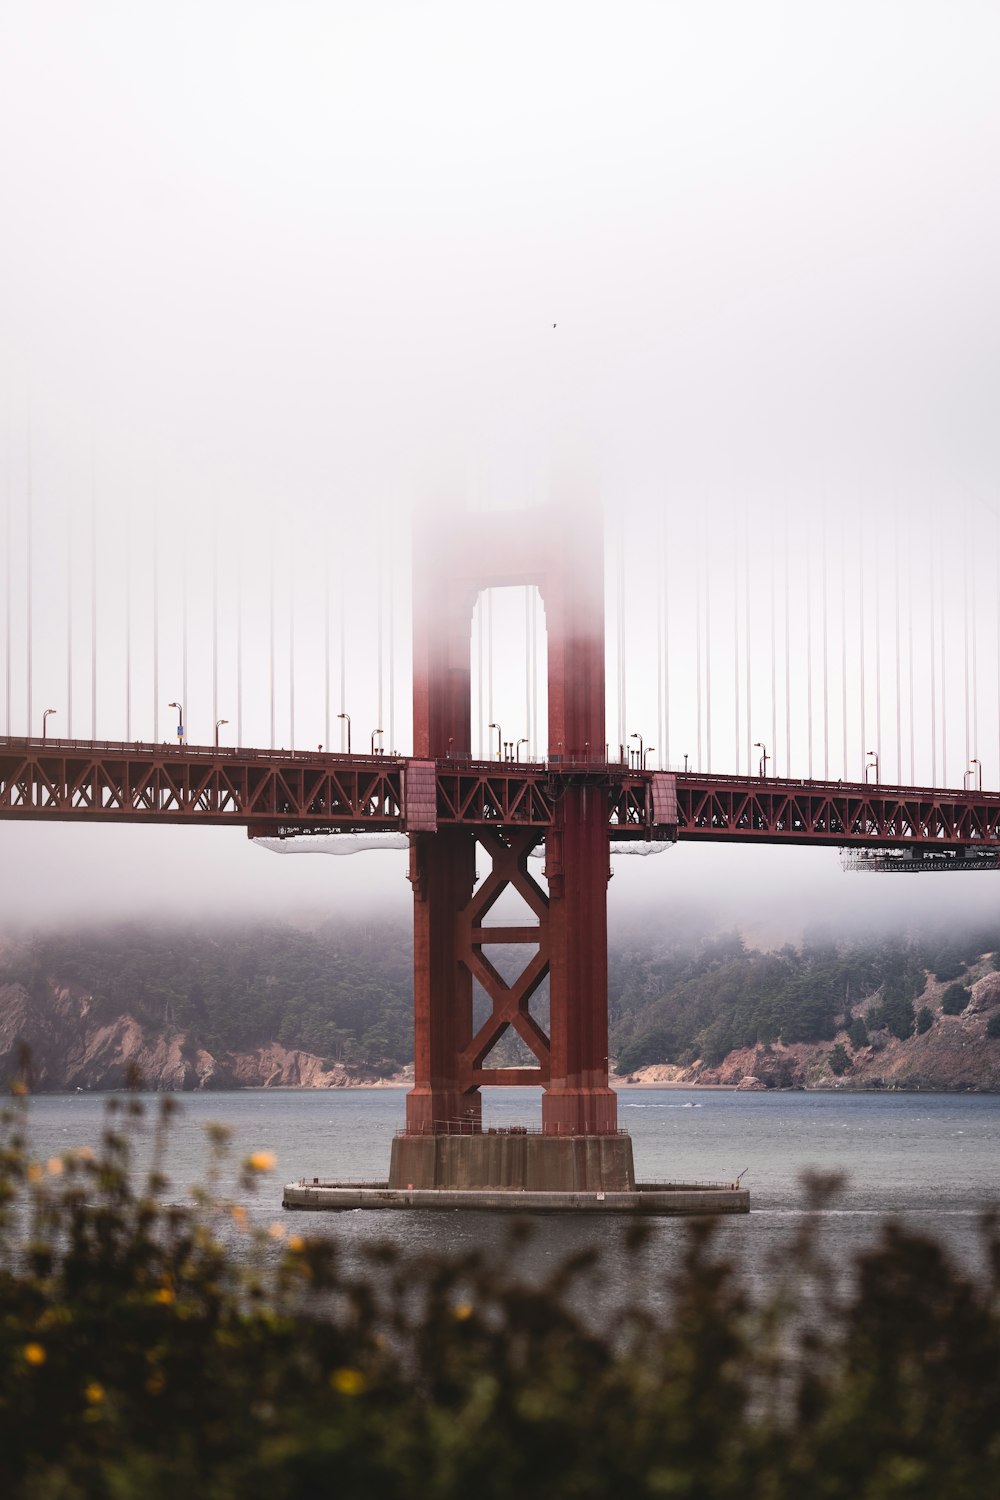 Golden Gate Bridge during foggy weather at daytime